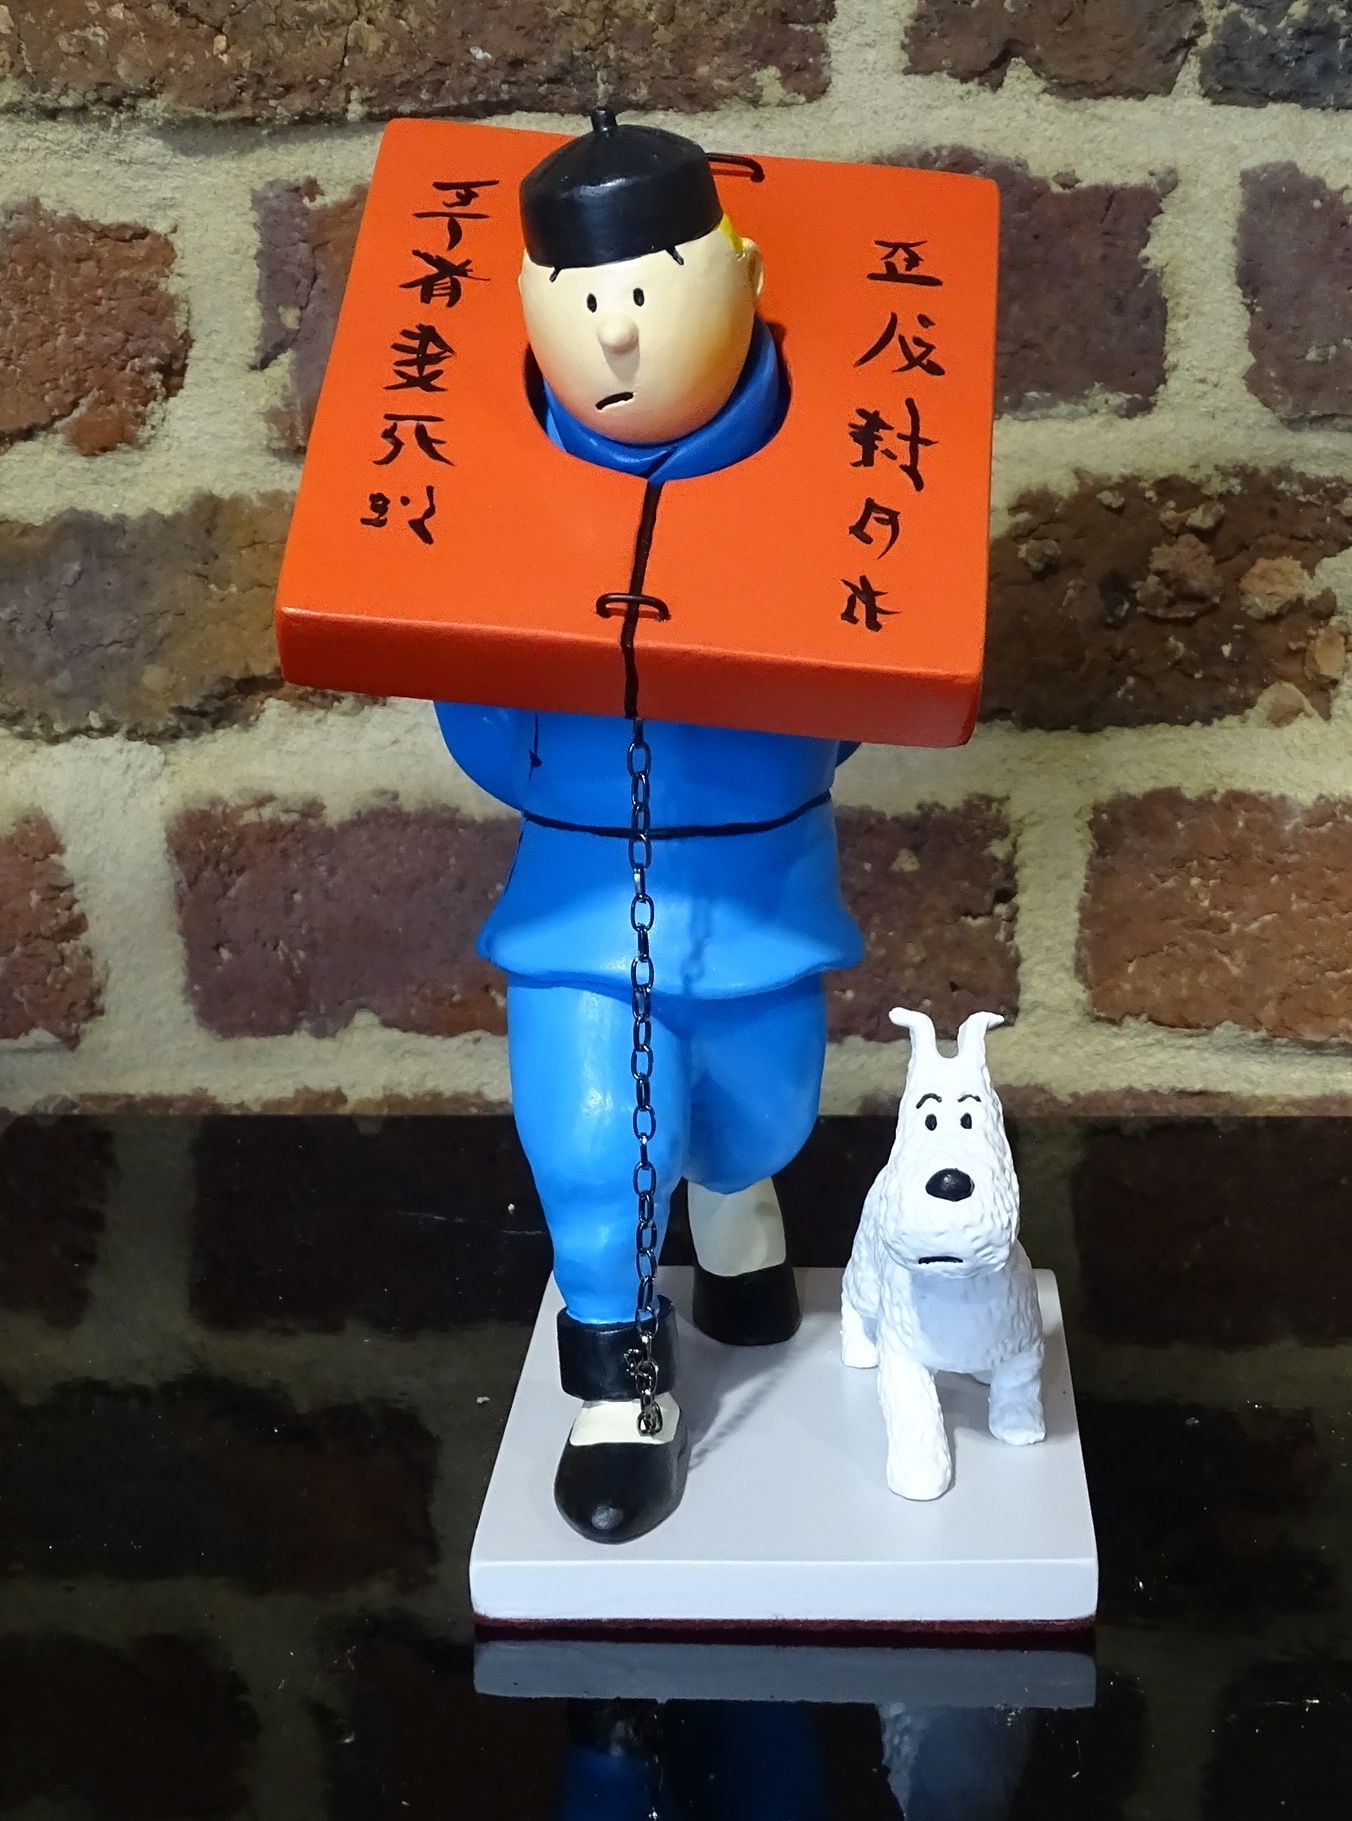 Tintin & Hergé 
囚禁蓝莲花的丁丁塑像，高25厘米。